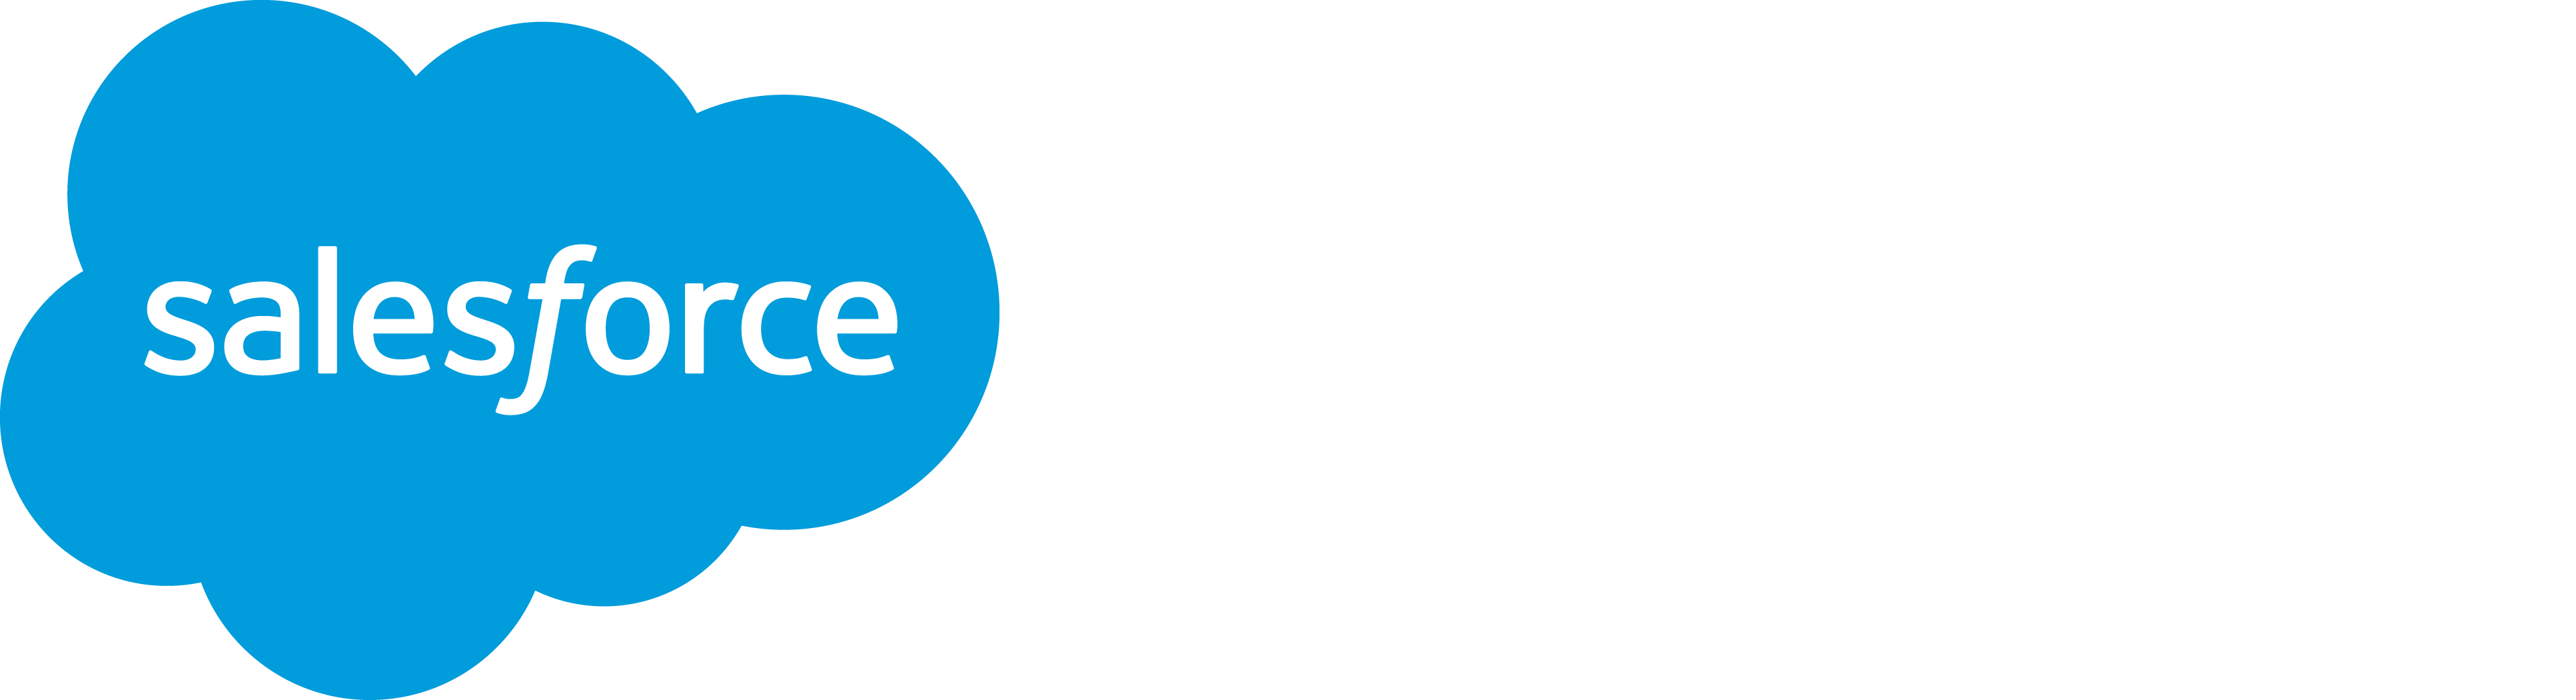 Salesforce AppExchange logo white